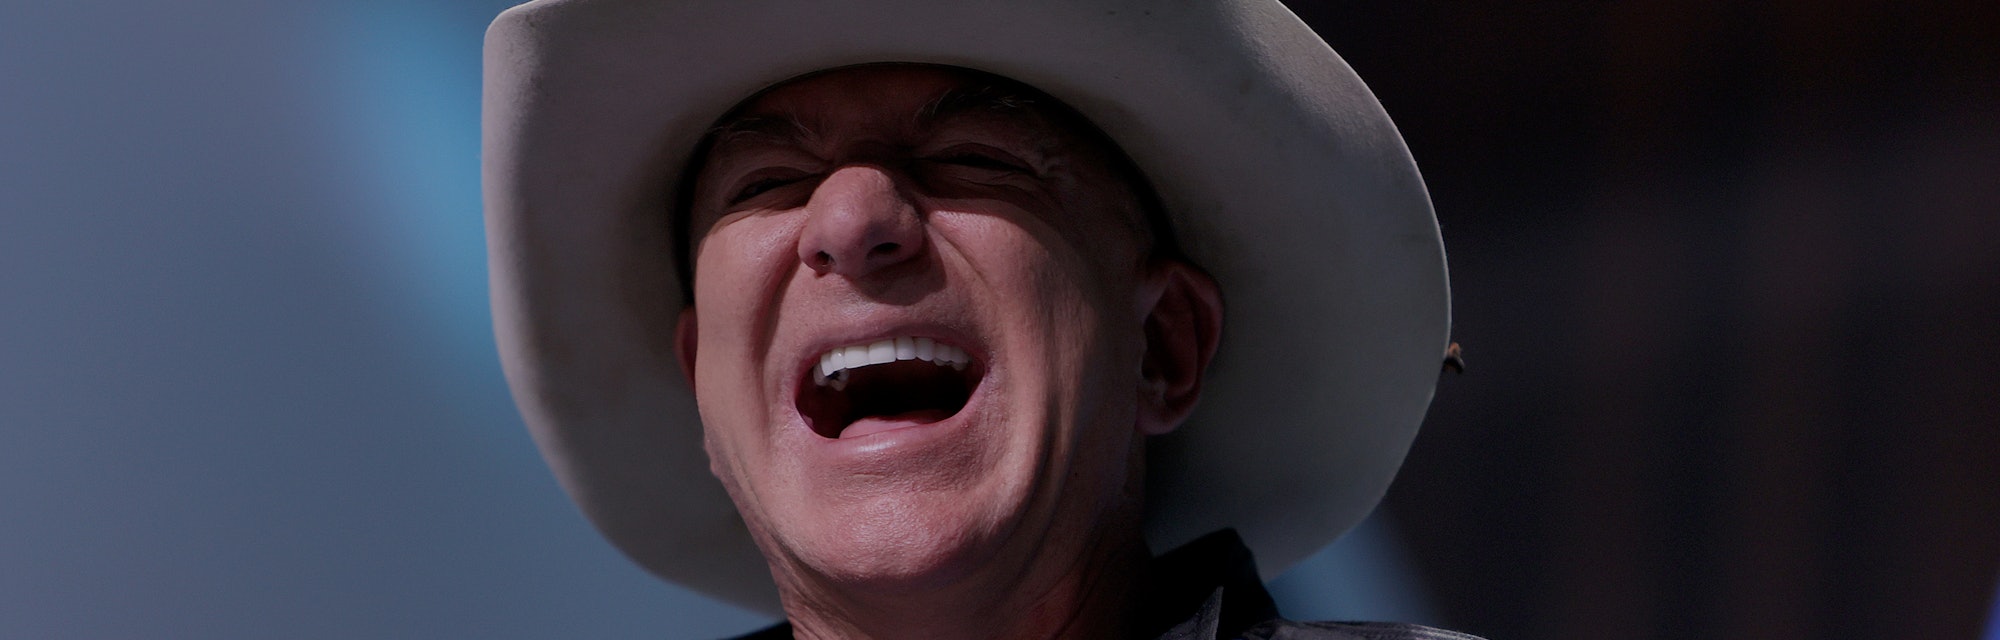 VAN HORN, TEXAS - JULY 20: Jeff Bezos laughs as he speaks about his flight on Blue Origin’s New Shep...